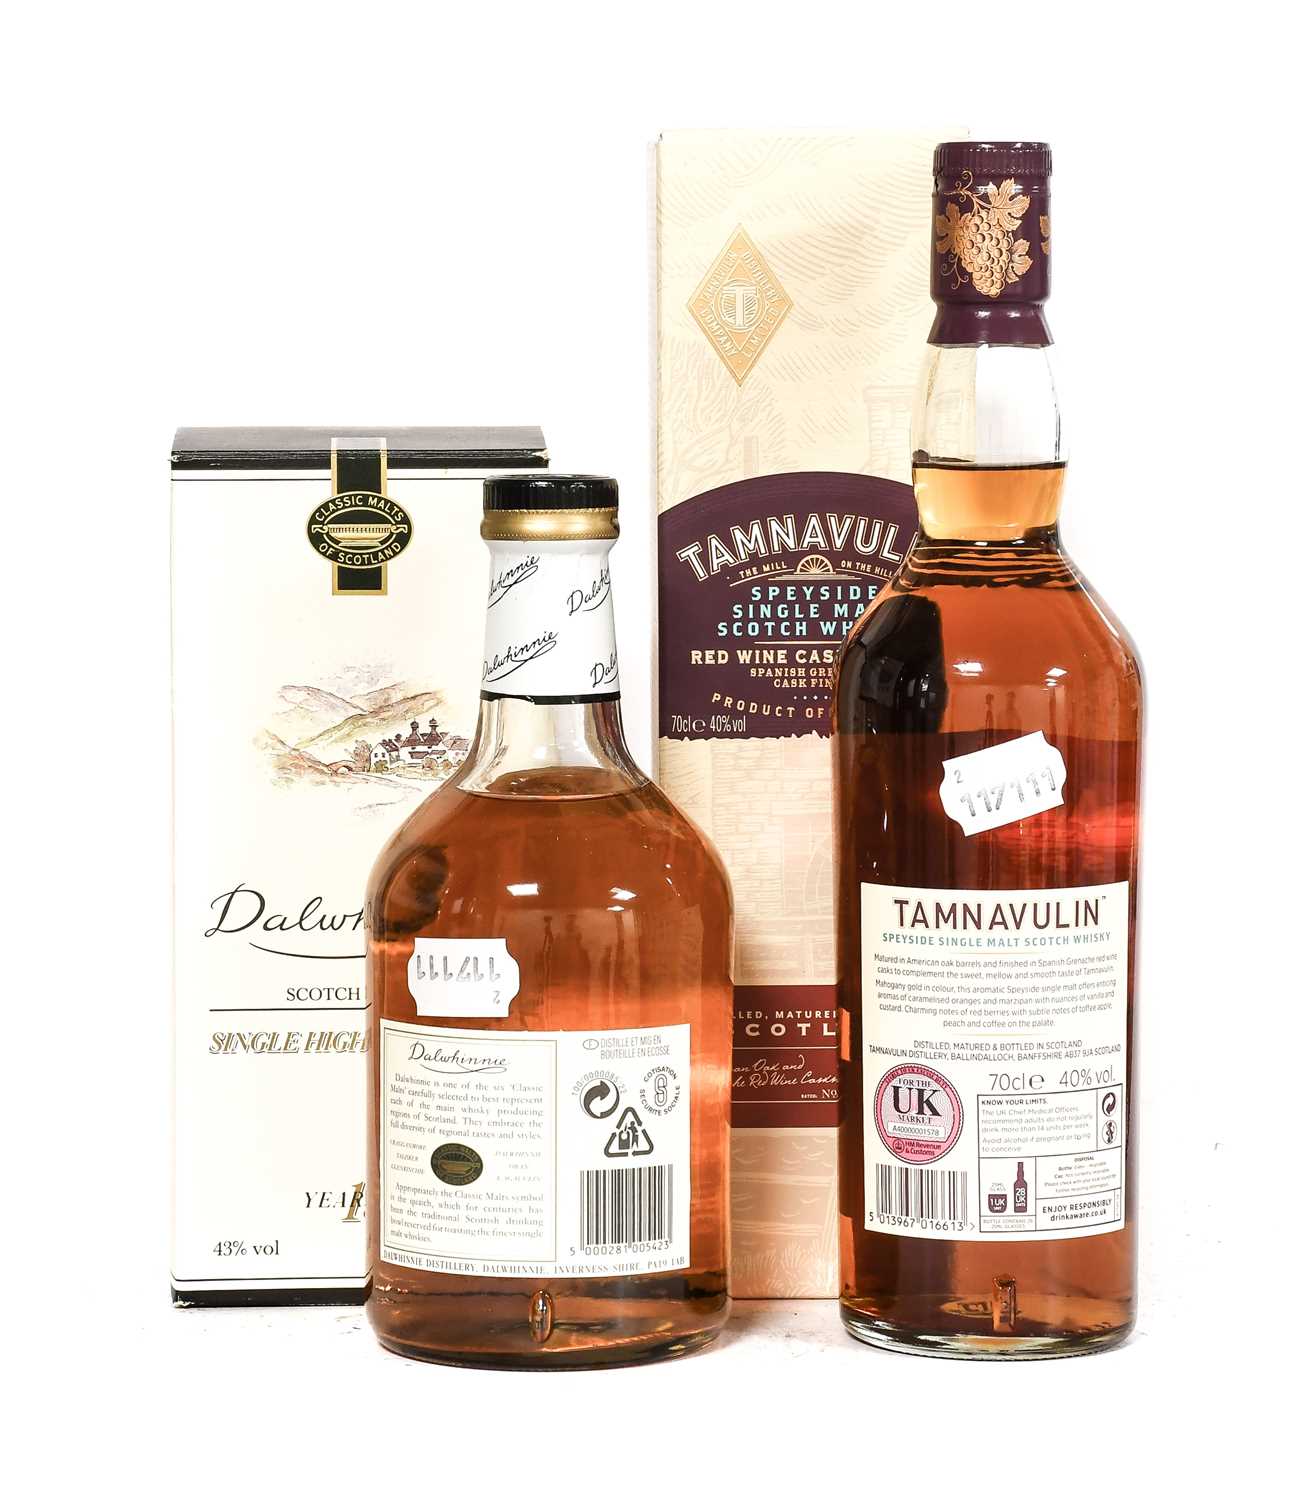 Laphroaig 10 Years Old Single Islay Malt Scotch Whisky, 40% 70cl (one bottle), Royal Lochnagar 12 - Image 4 of 5